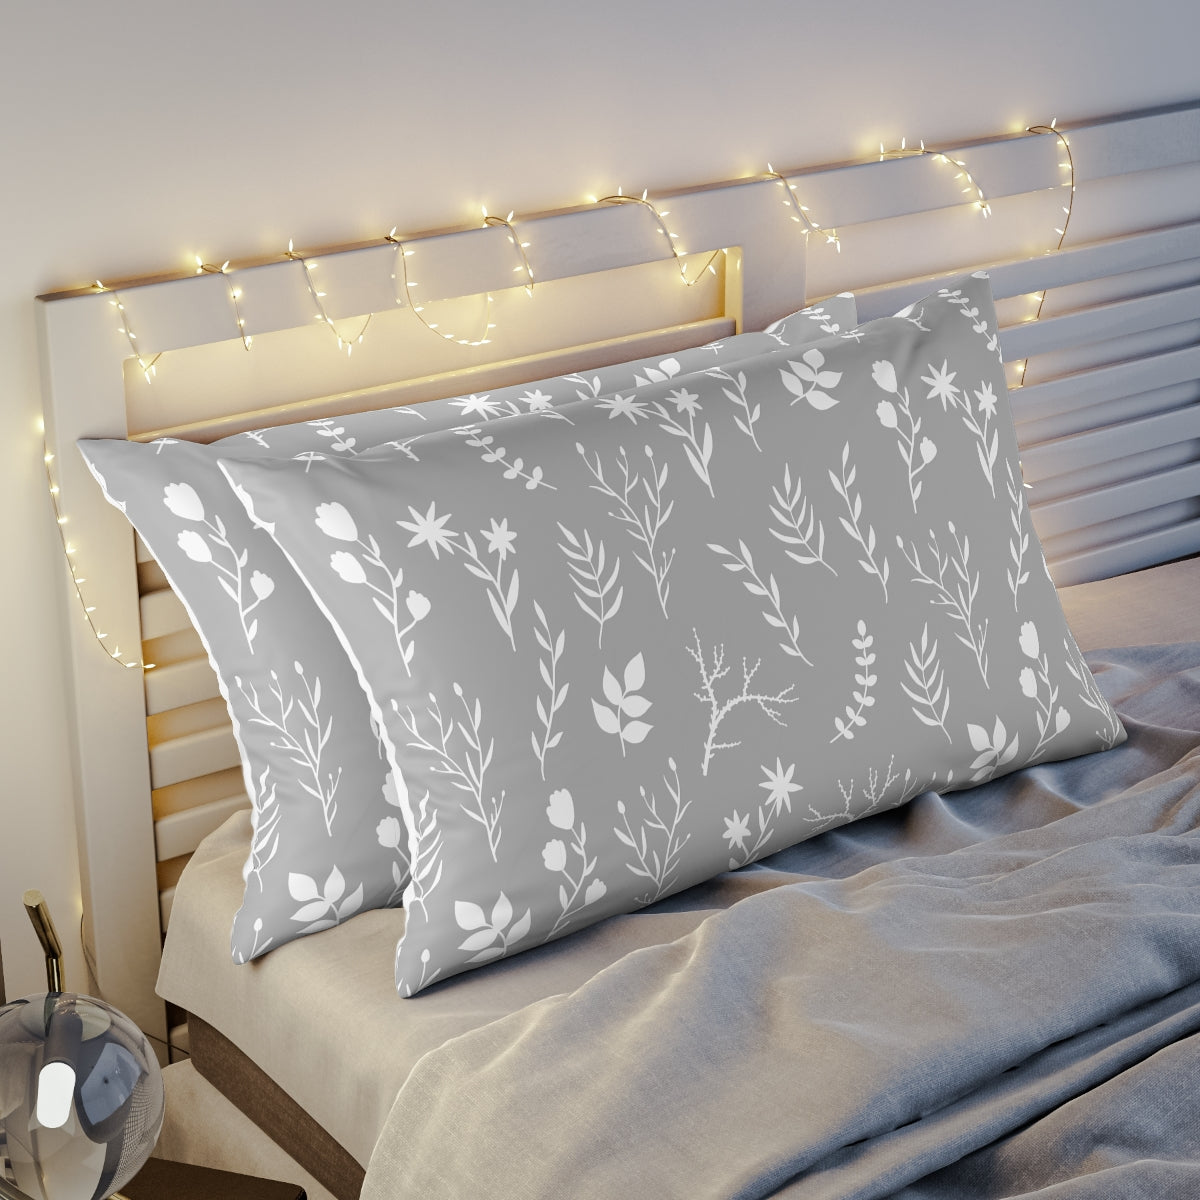 1 Grey and White Floral Print Pillowcase | Modern Grey Floral Pillowcae - Home Stitchery Decor